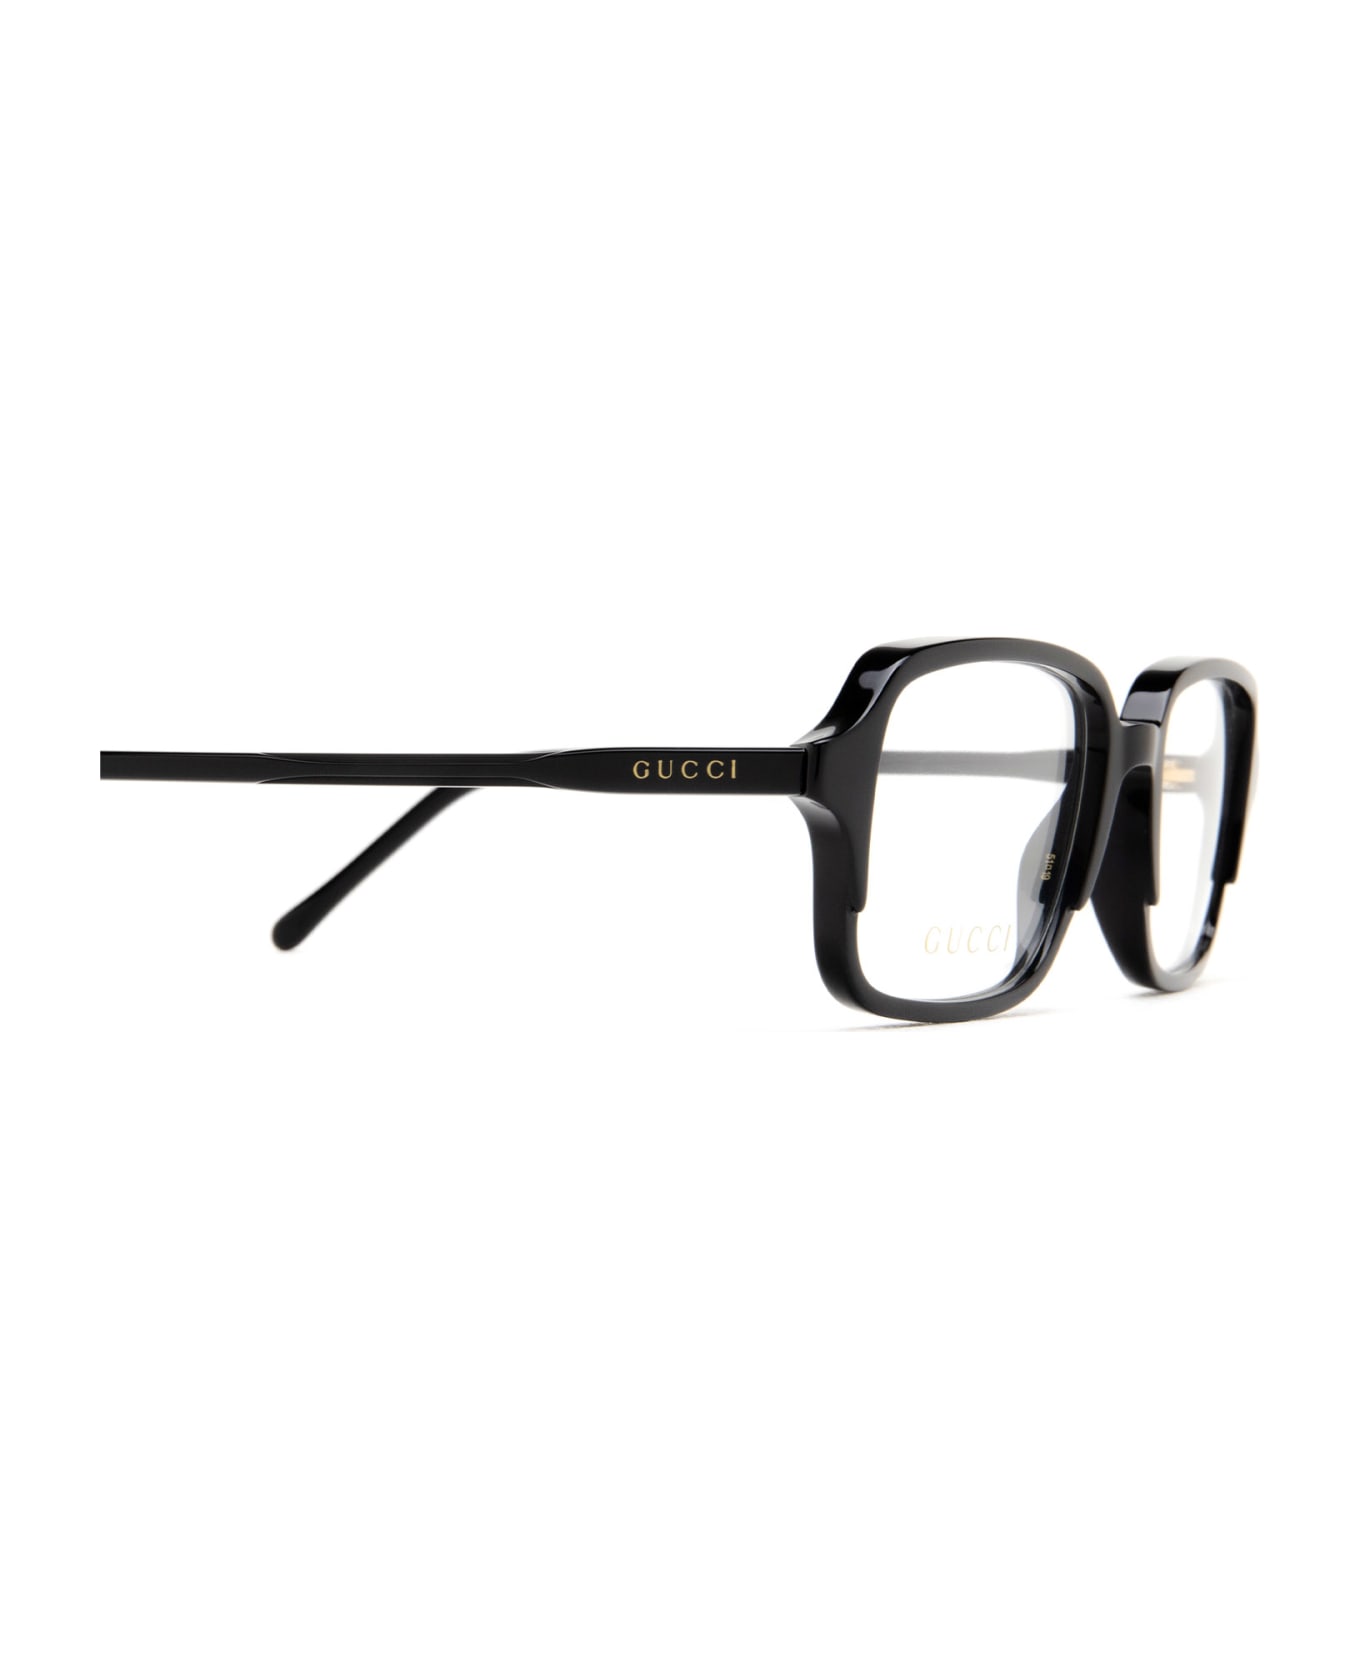 Gucci Eyewear Gg1211o Black Glasses - Black